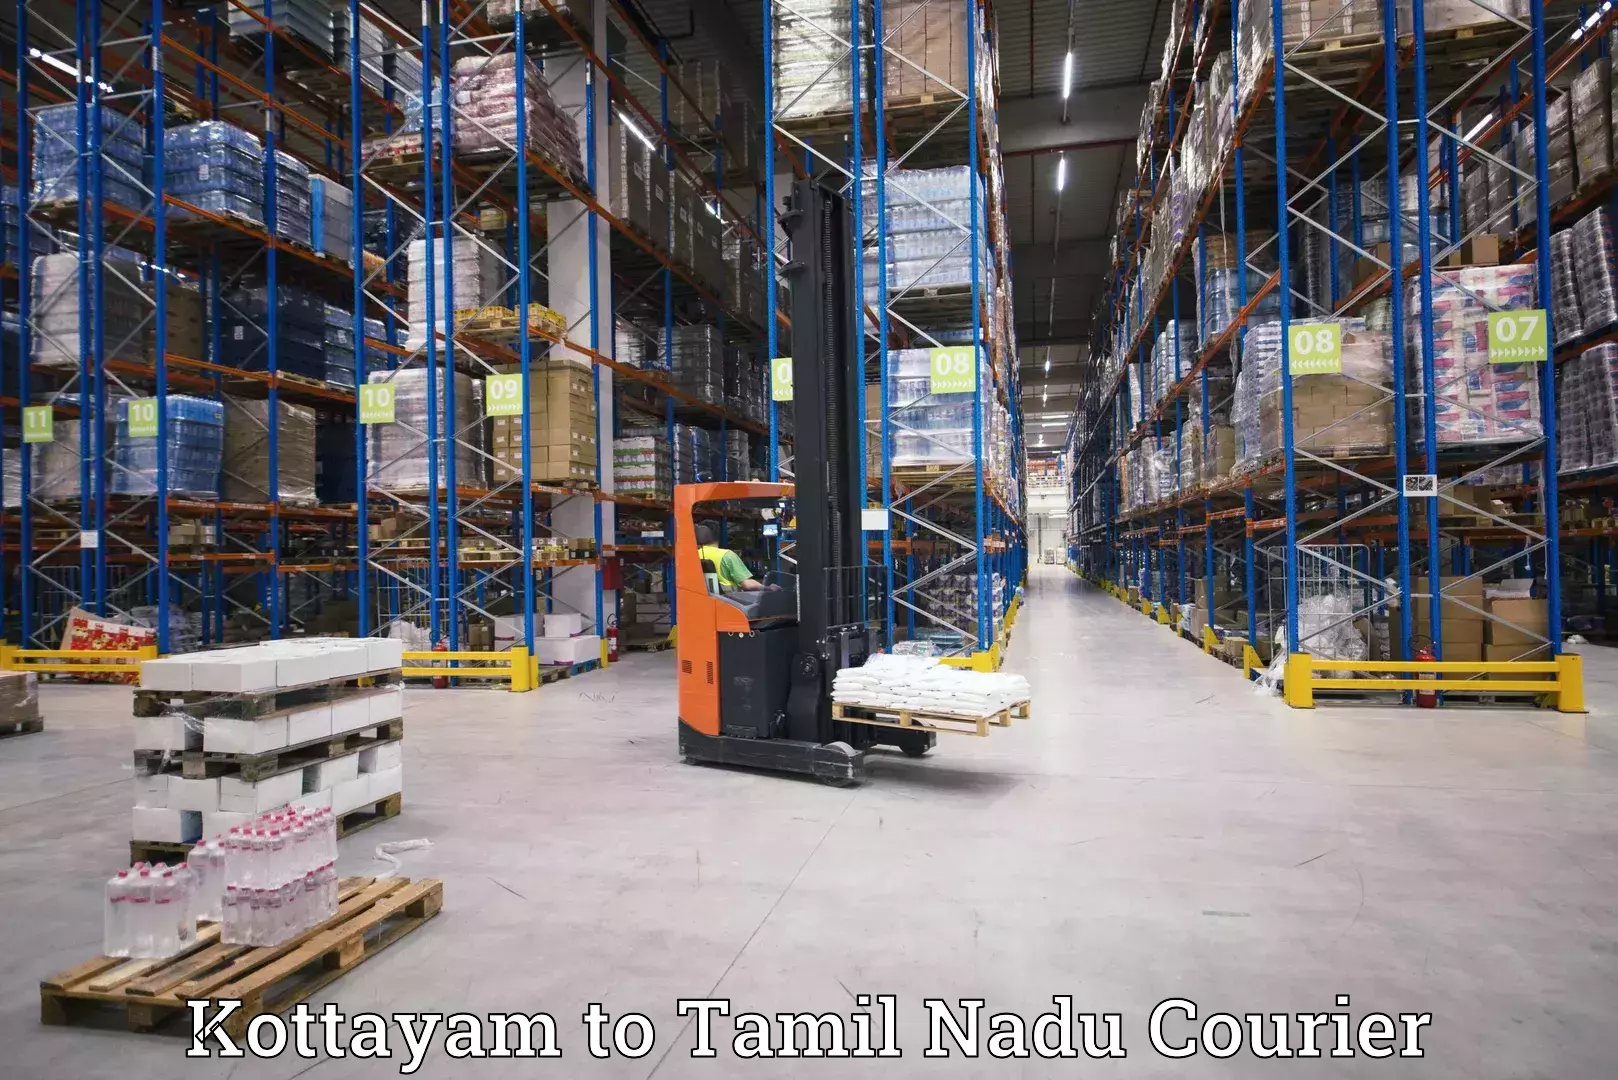 Nationwide delivery network Kottayam to Kodumudi